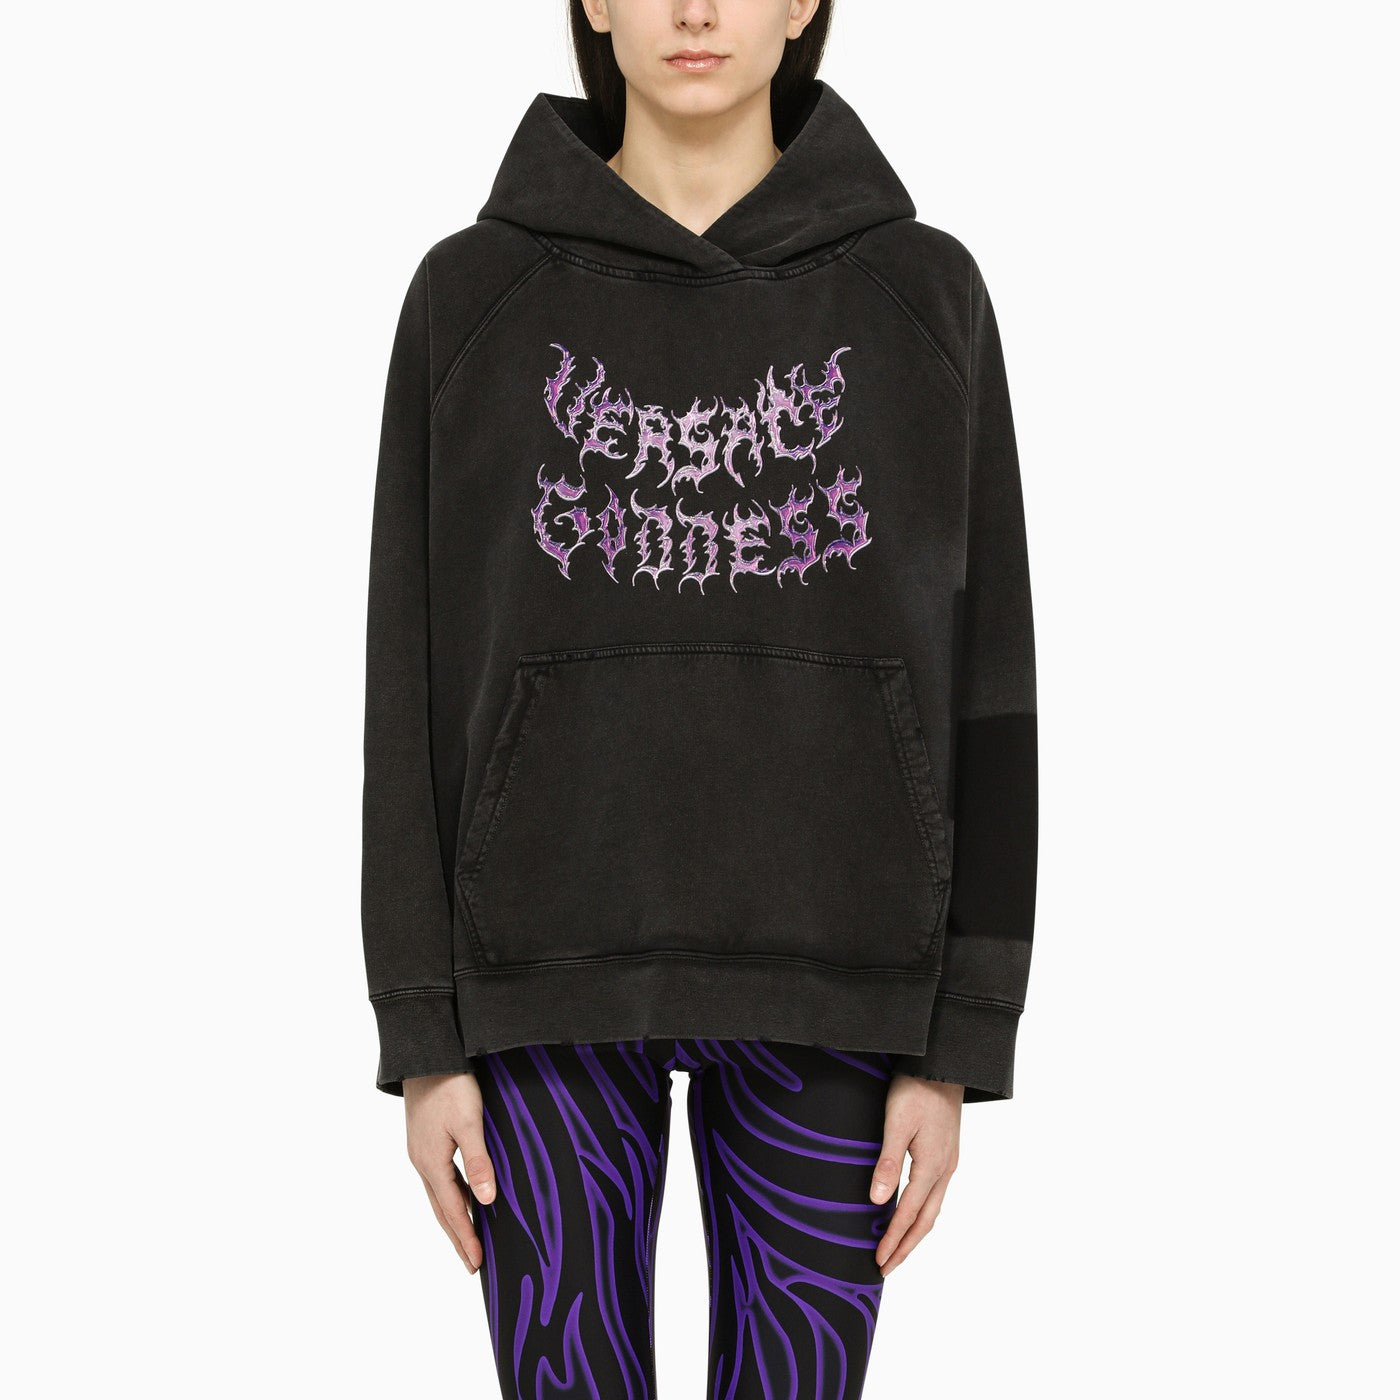 Versace Versace Goddess logo hoodie - Black